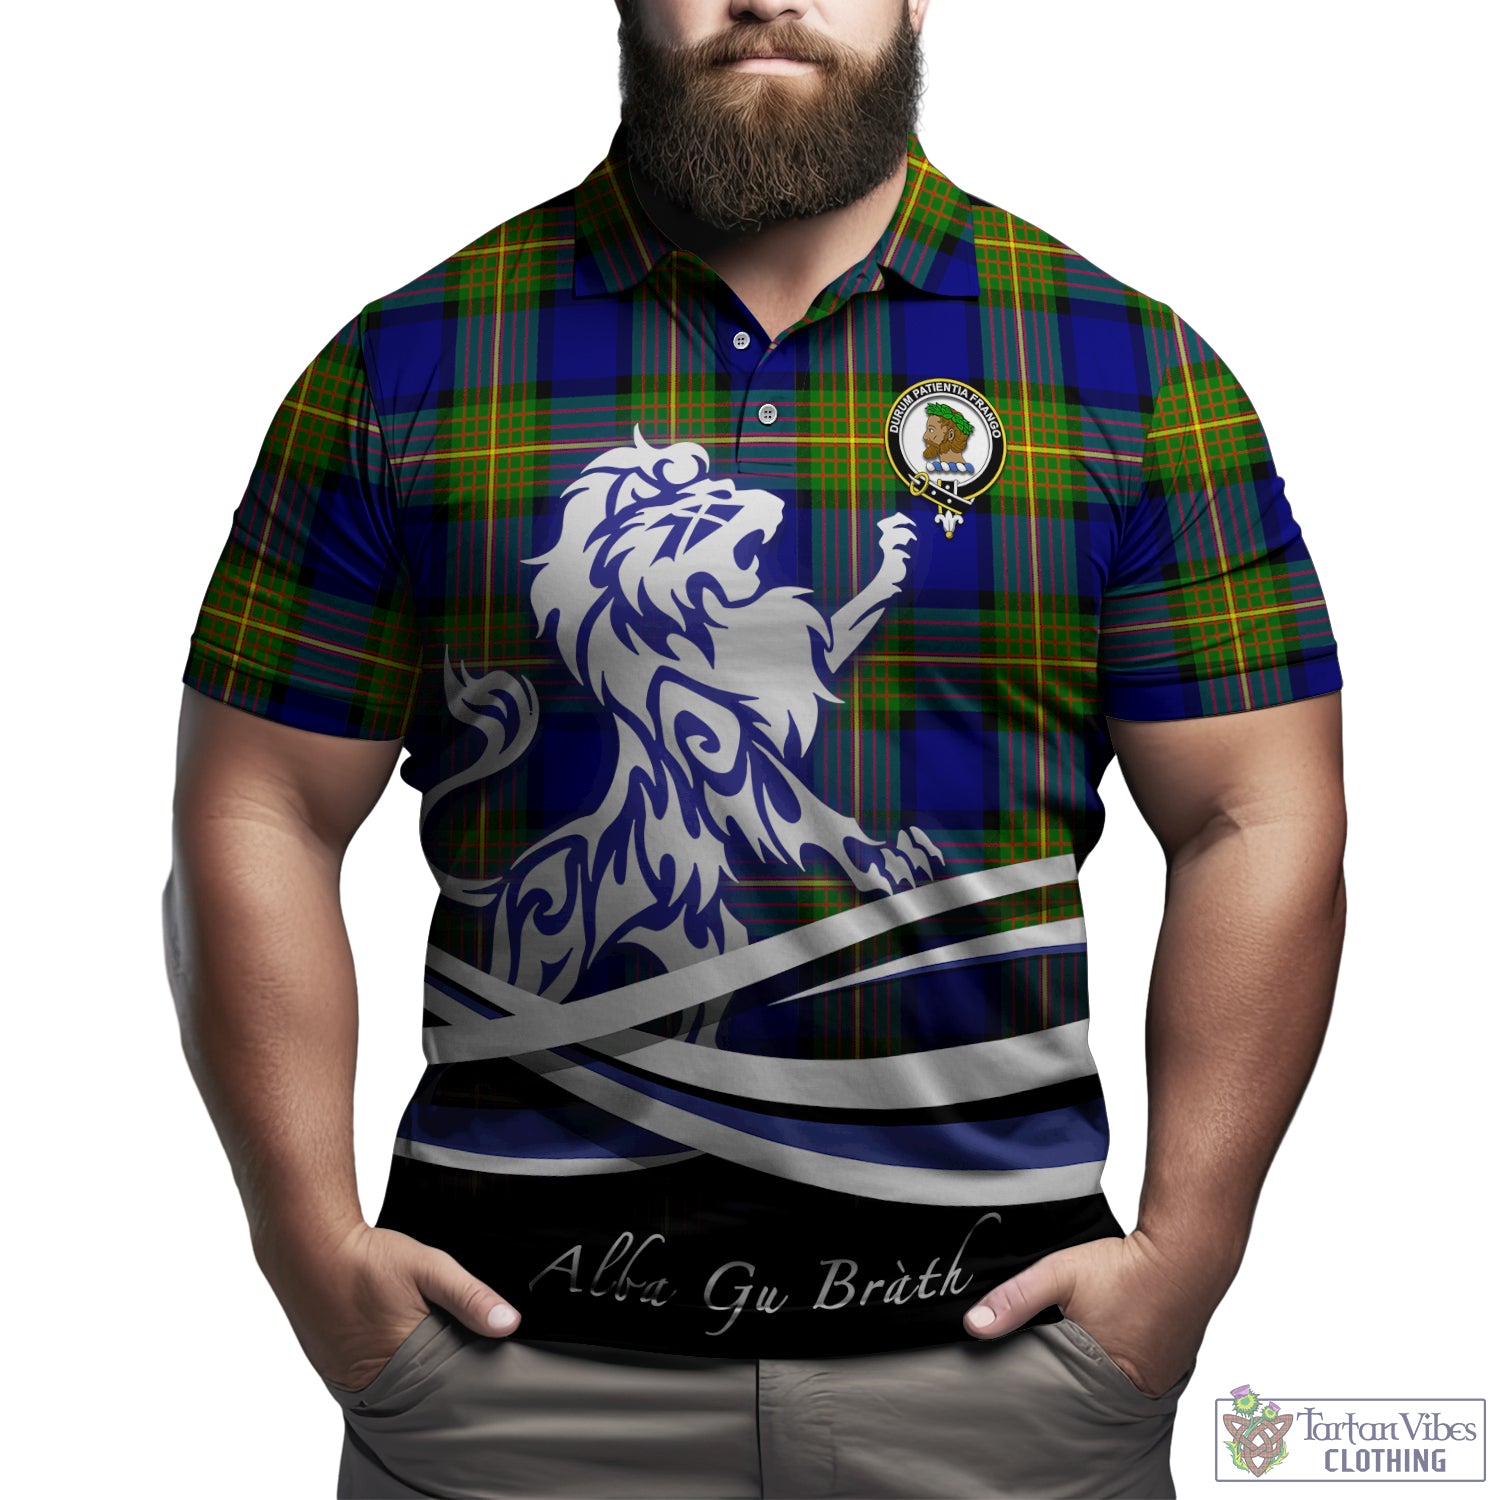 moore-tartan-polo-shirt-with-alba-gu-brath-regal-lion-emblem